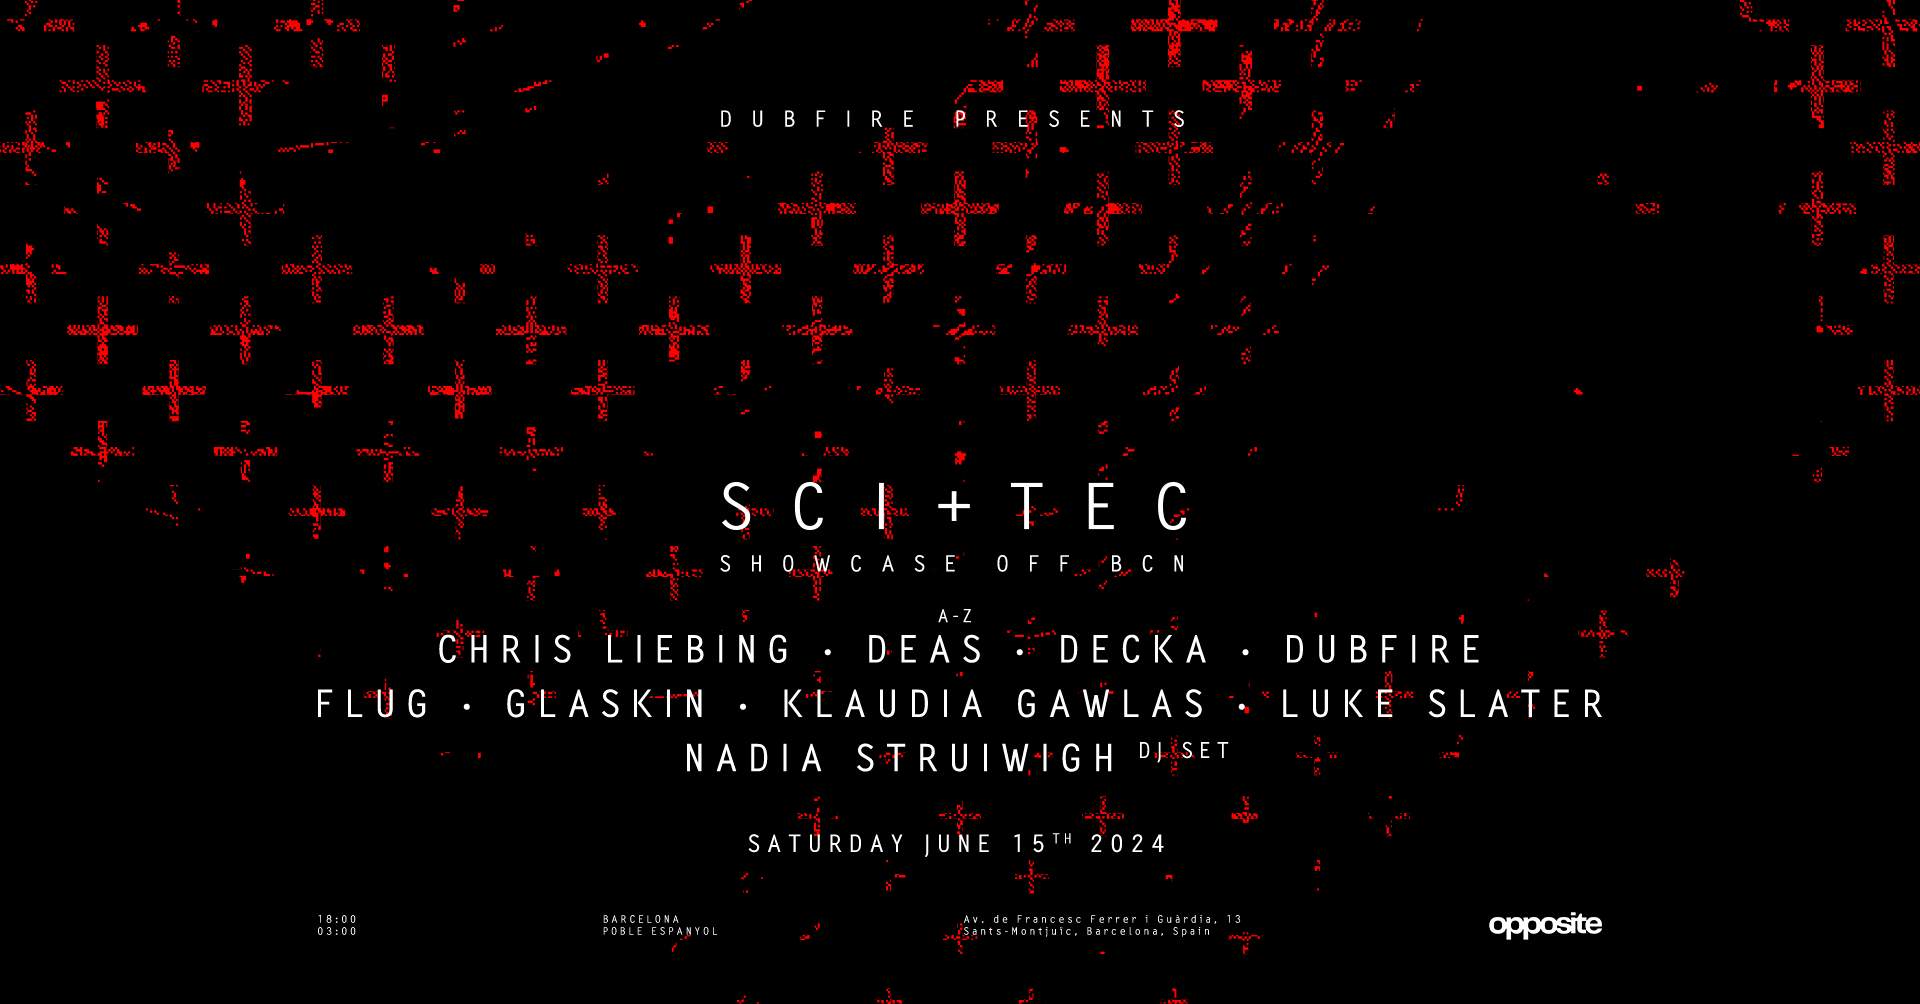 Dubfire presents SCI+TEC Showcase at Opposite - OFF BCN - フライヤー表